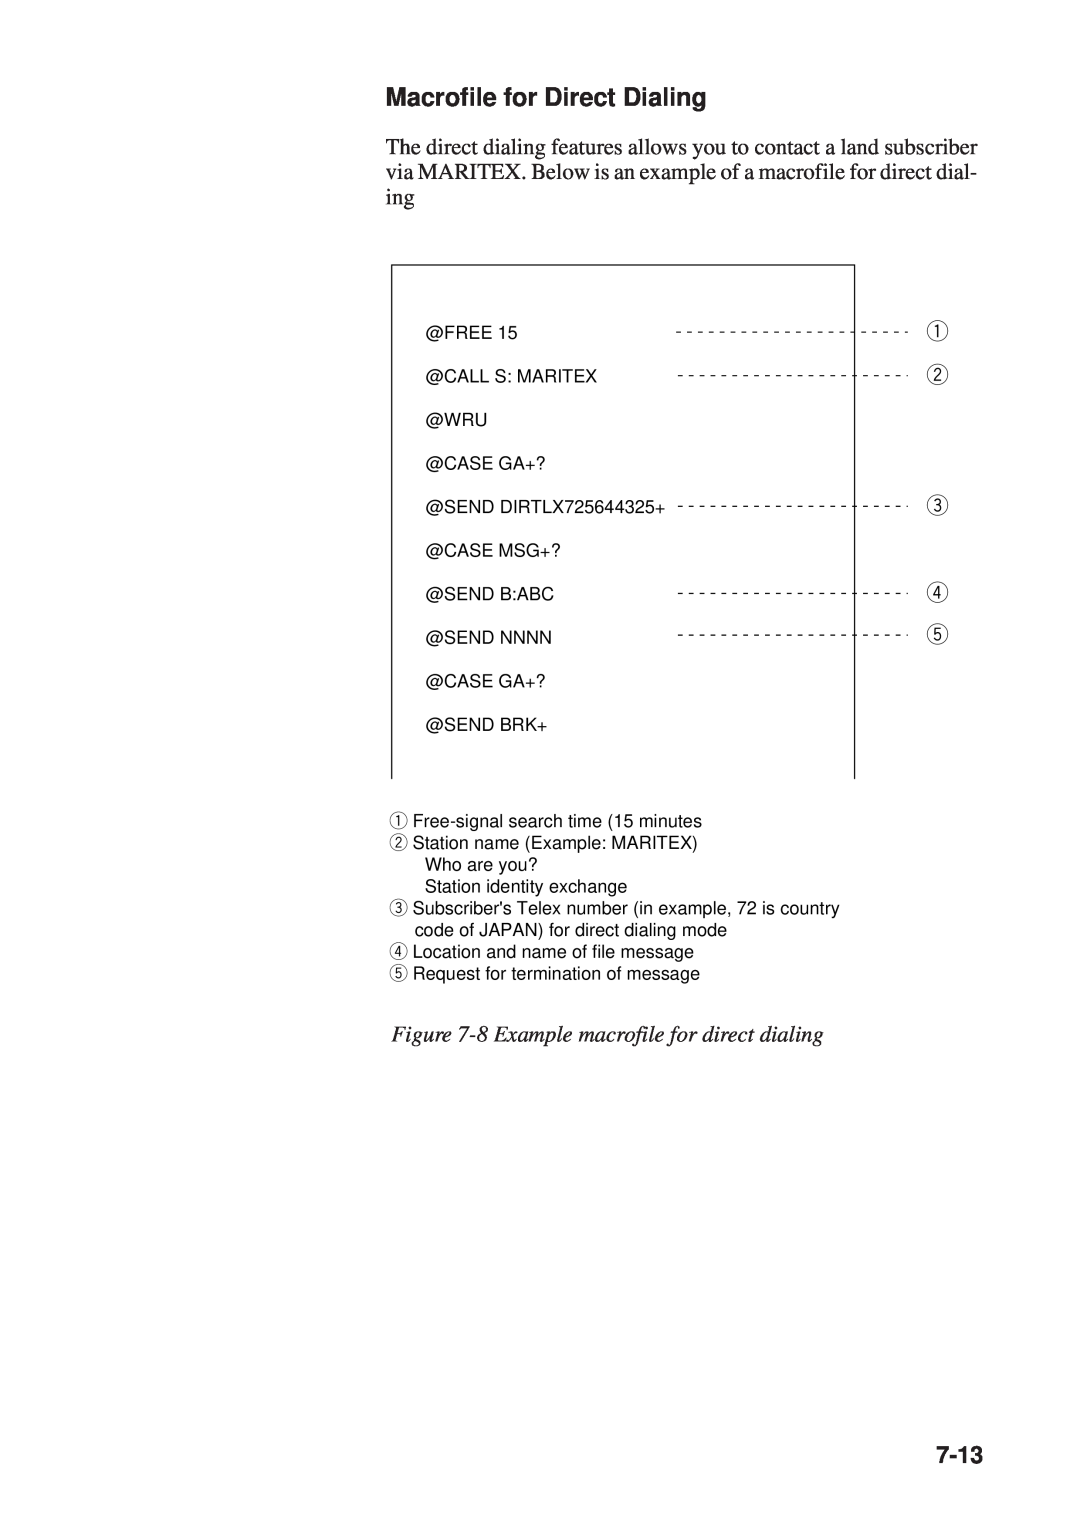 Furuno RC-1500-1T manual Macrofile for Direct Dialing, 8 Example macrofile for direct dialing, 7-13 